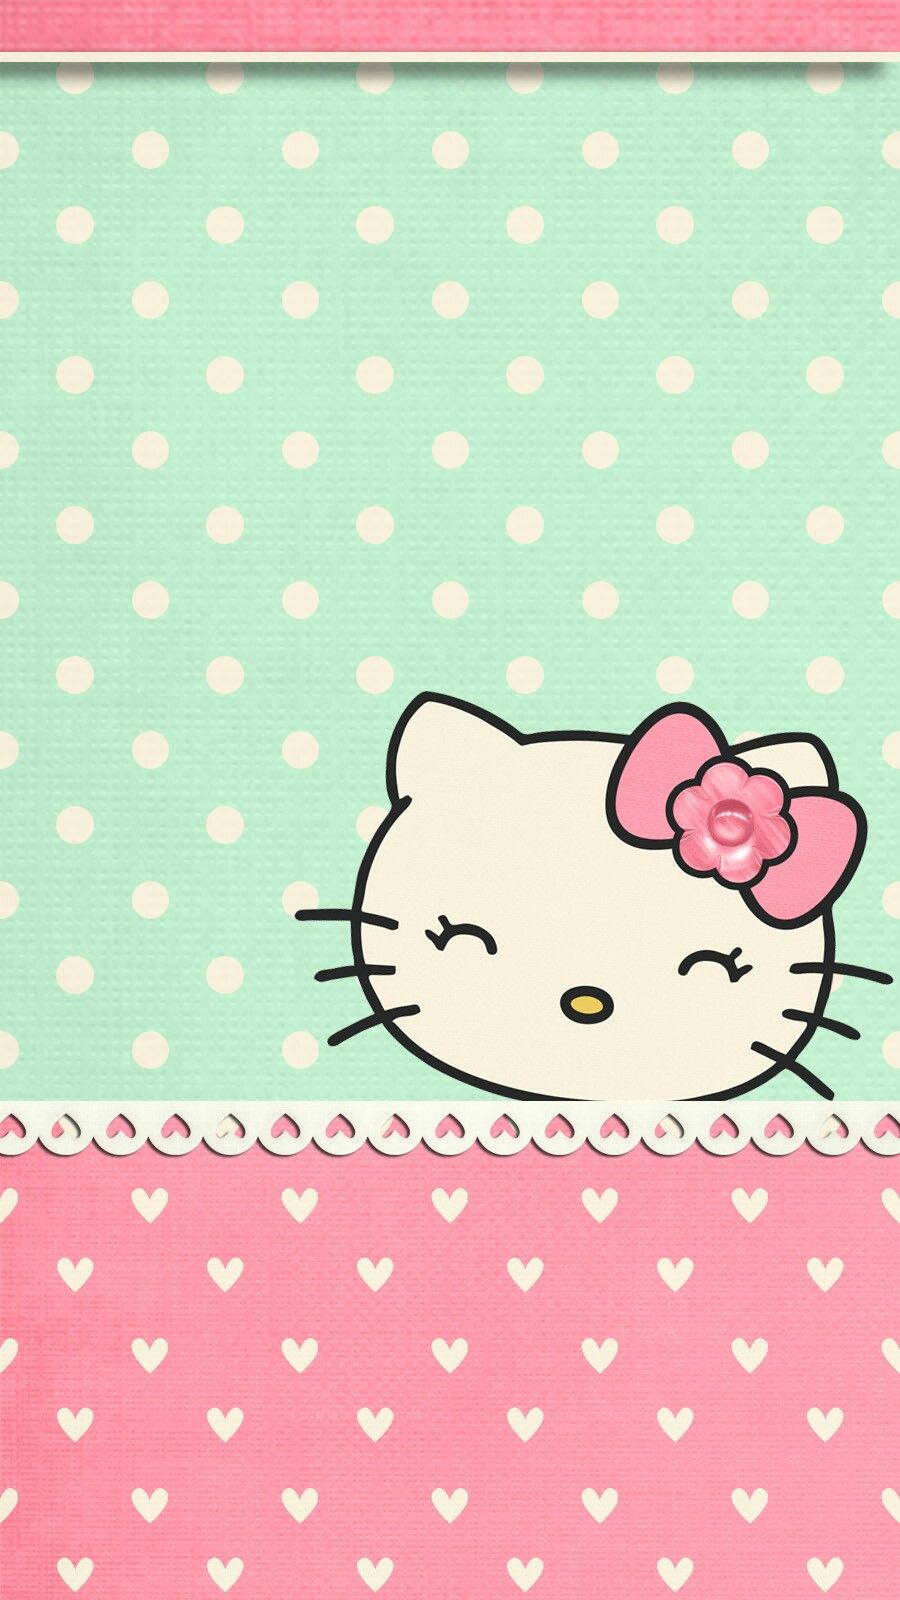 Spring blossom04. Hello kitty wallpaper, Hello kitty background, Hello kitty wallpaper hd